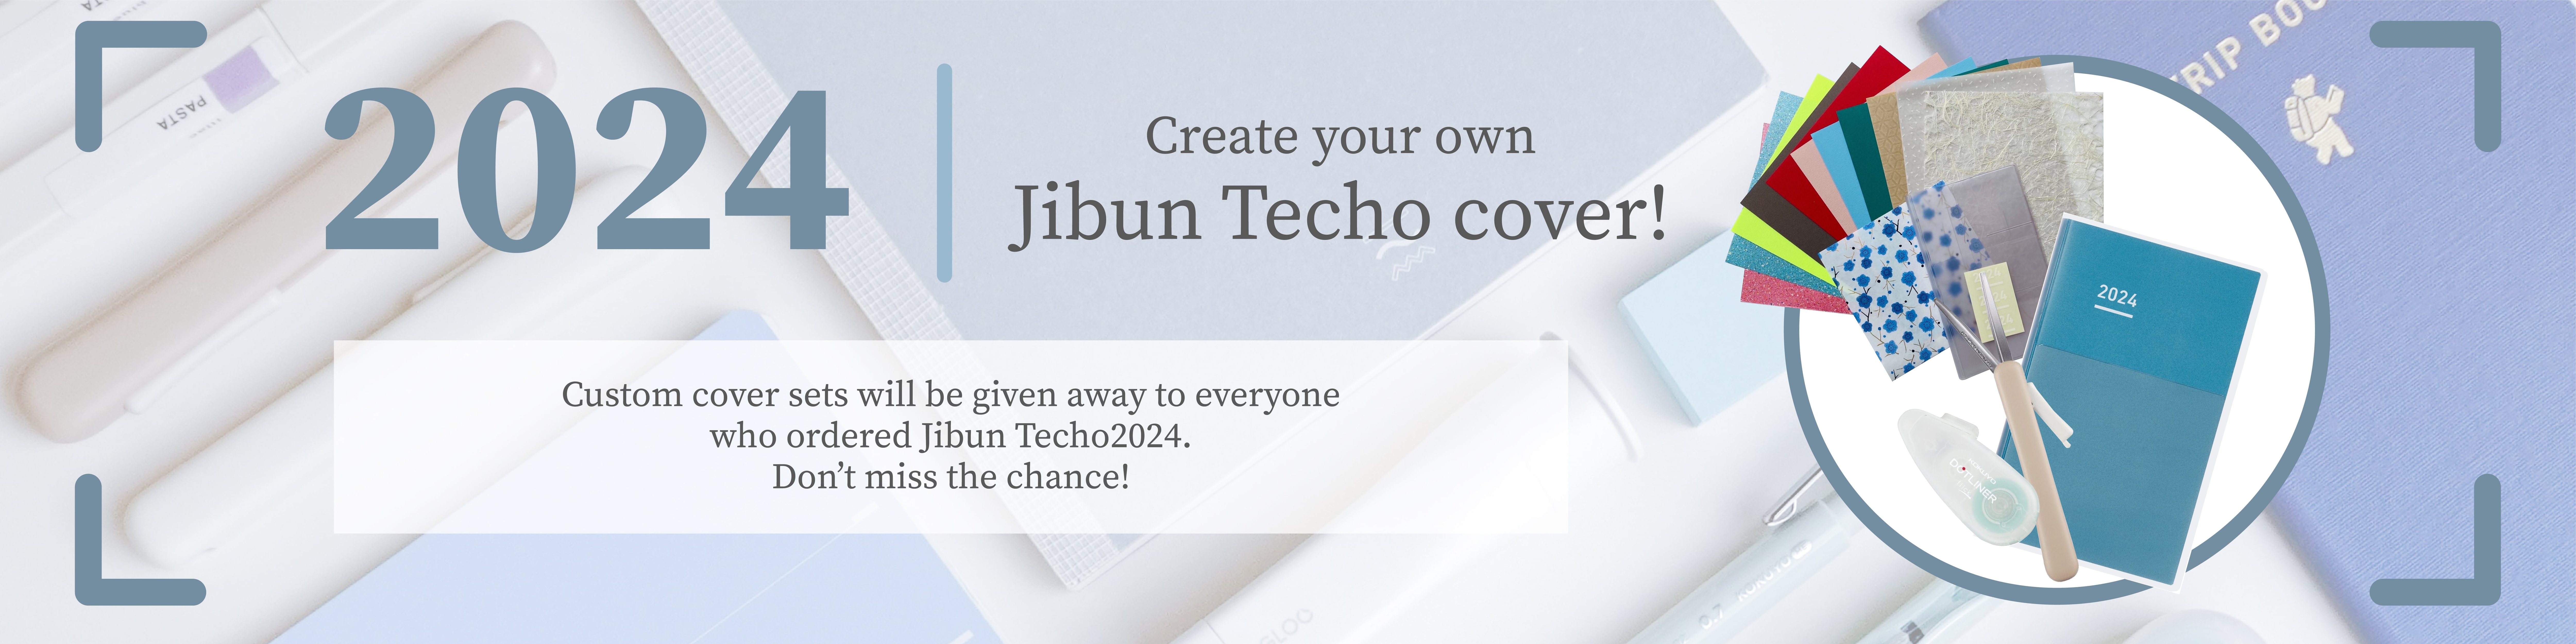 Jibun Techo Biz banner